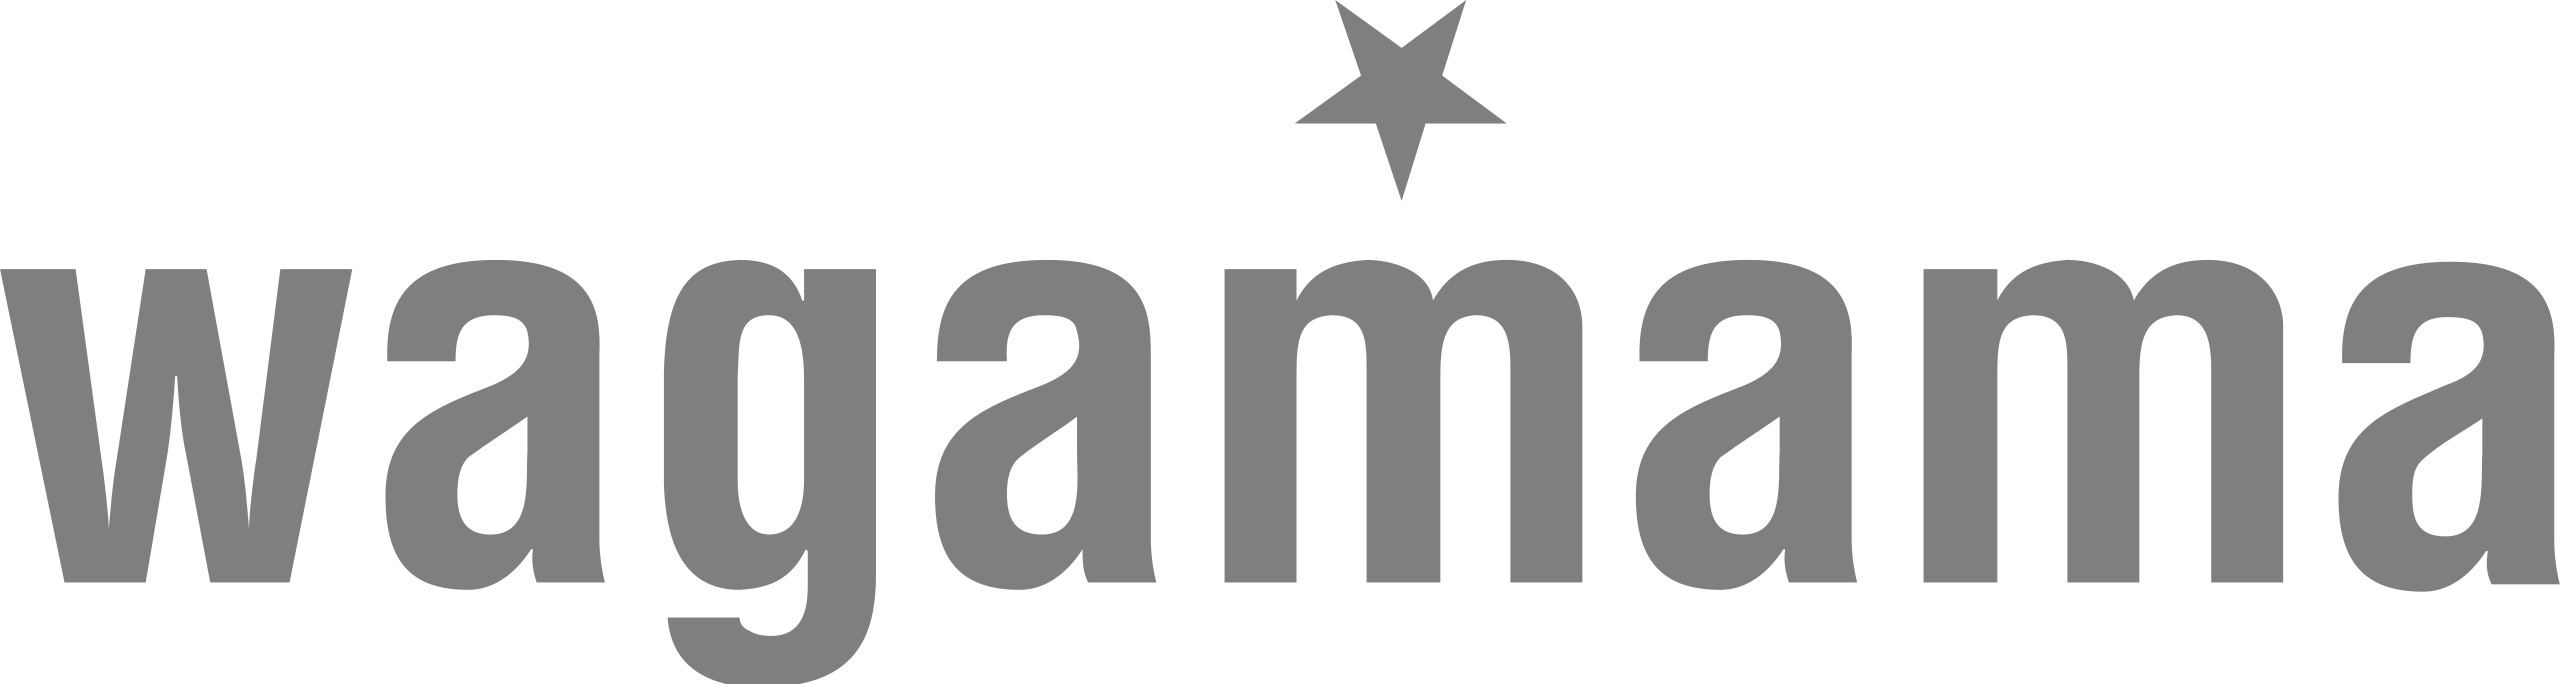 Wagamama brand logo